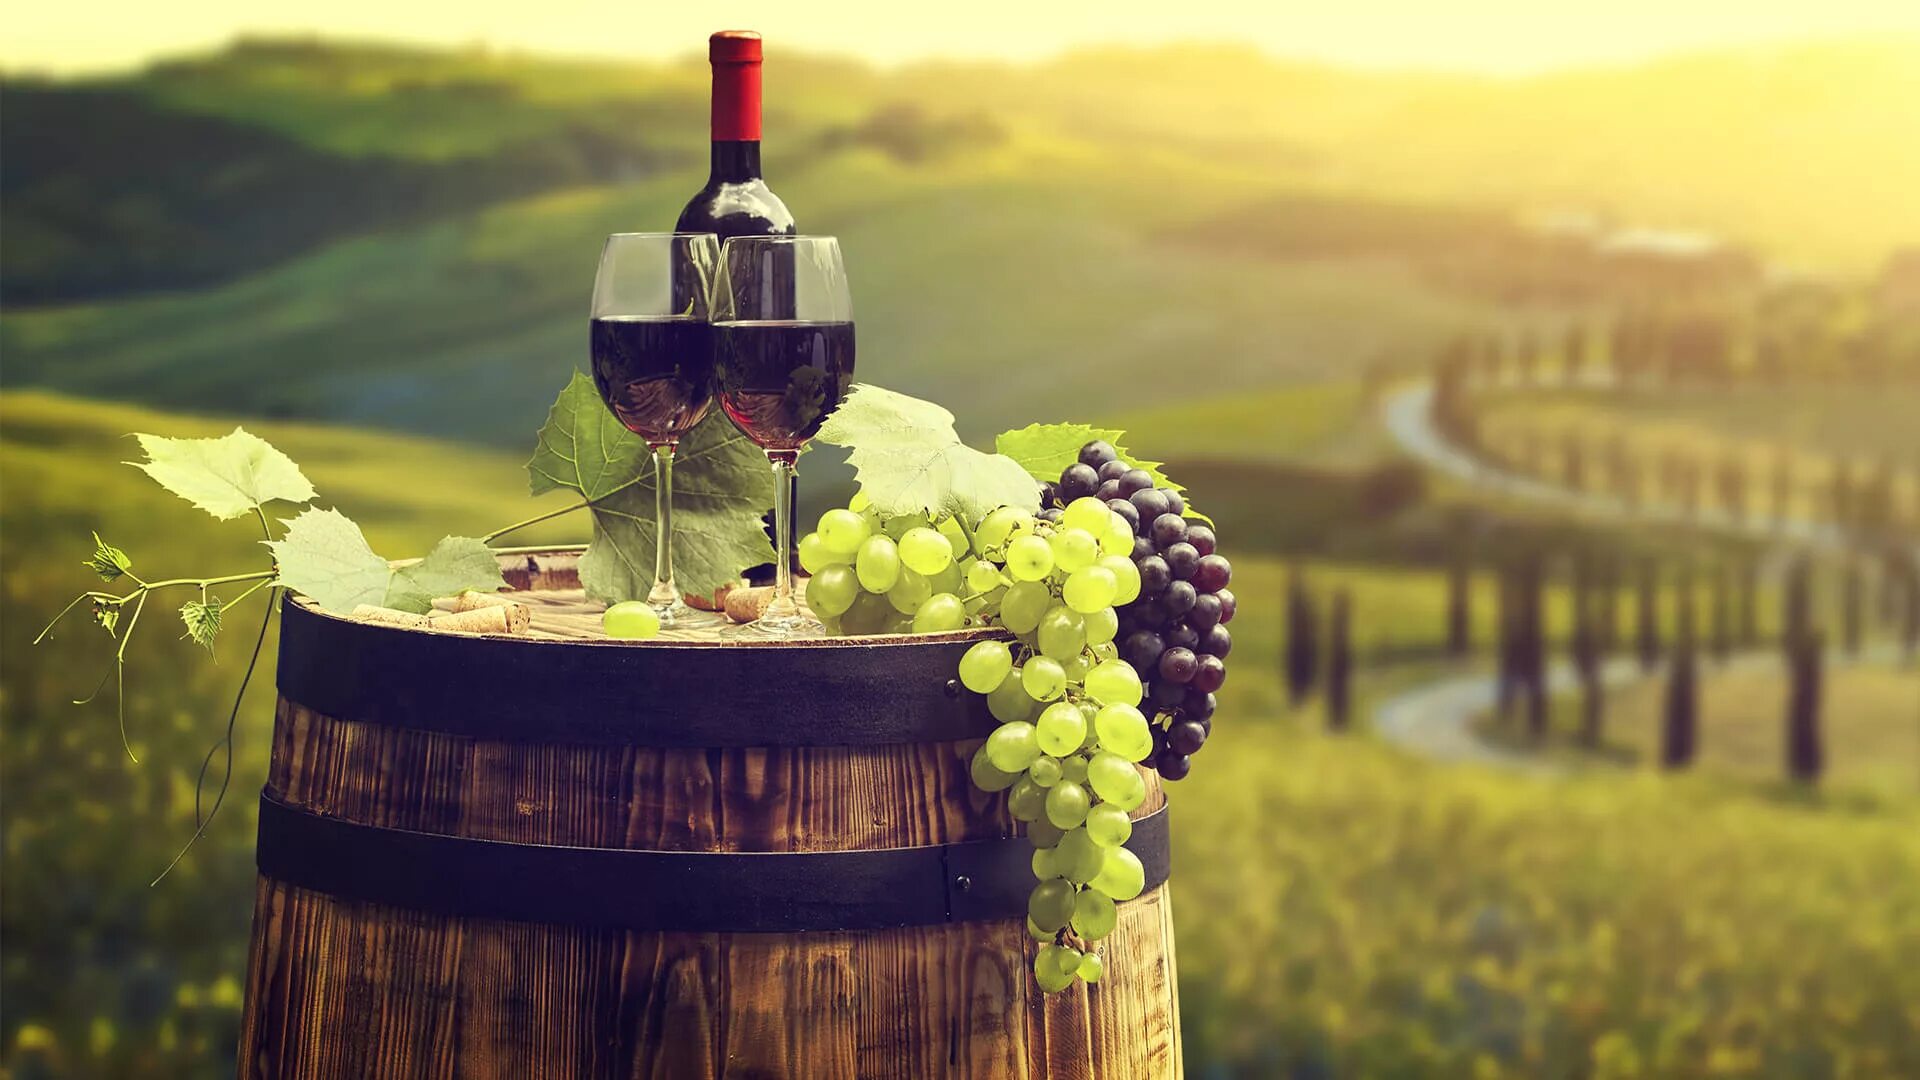 Шато Пино винодельня. Виноградники Абрау Дюрсо. Вино и виноград. Винный туризм.